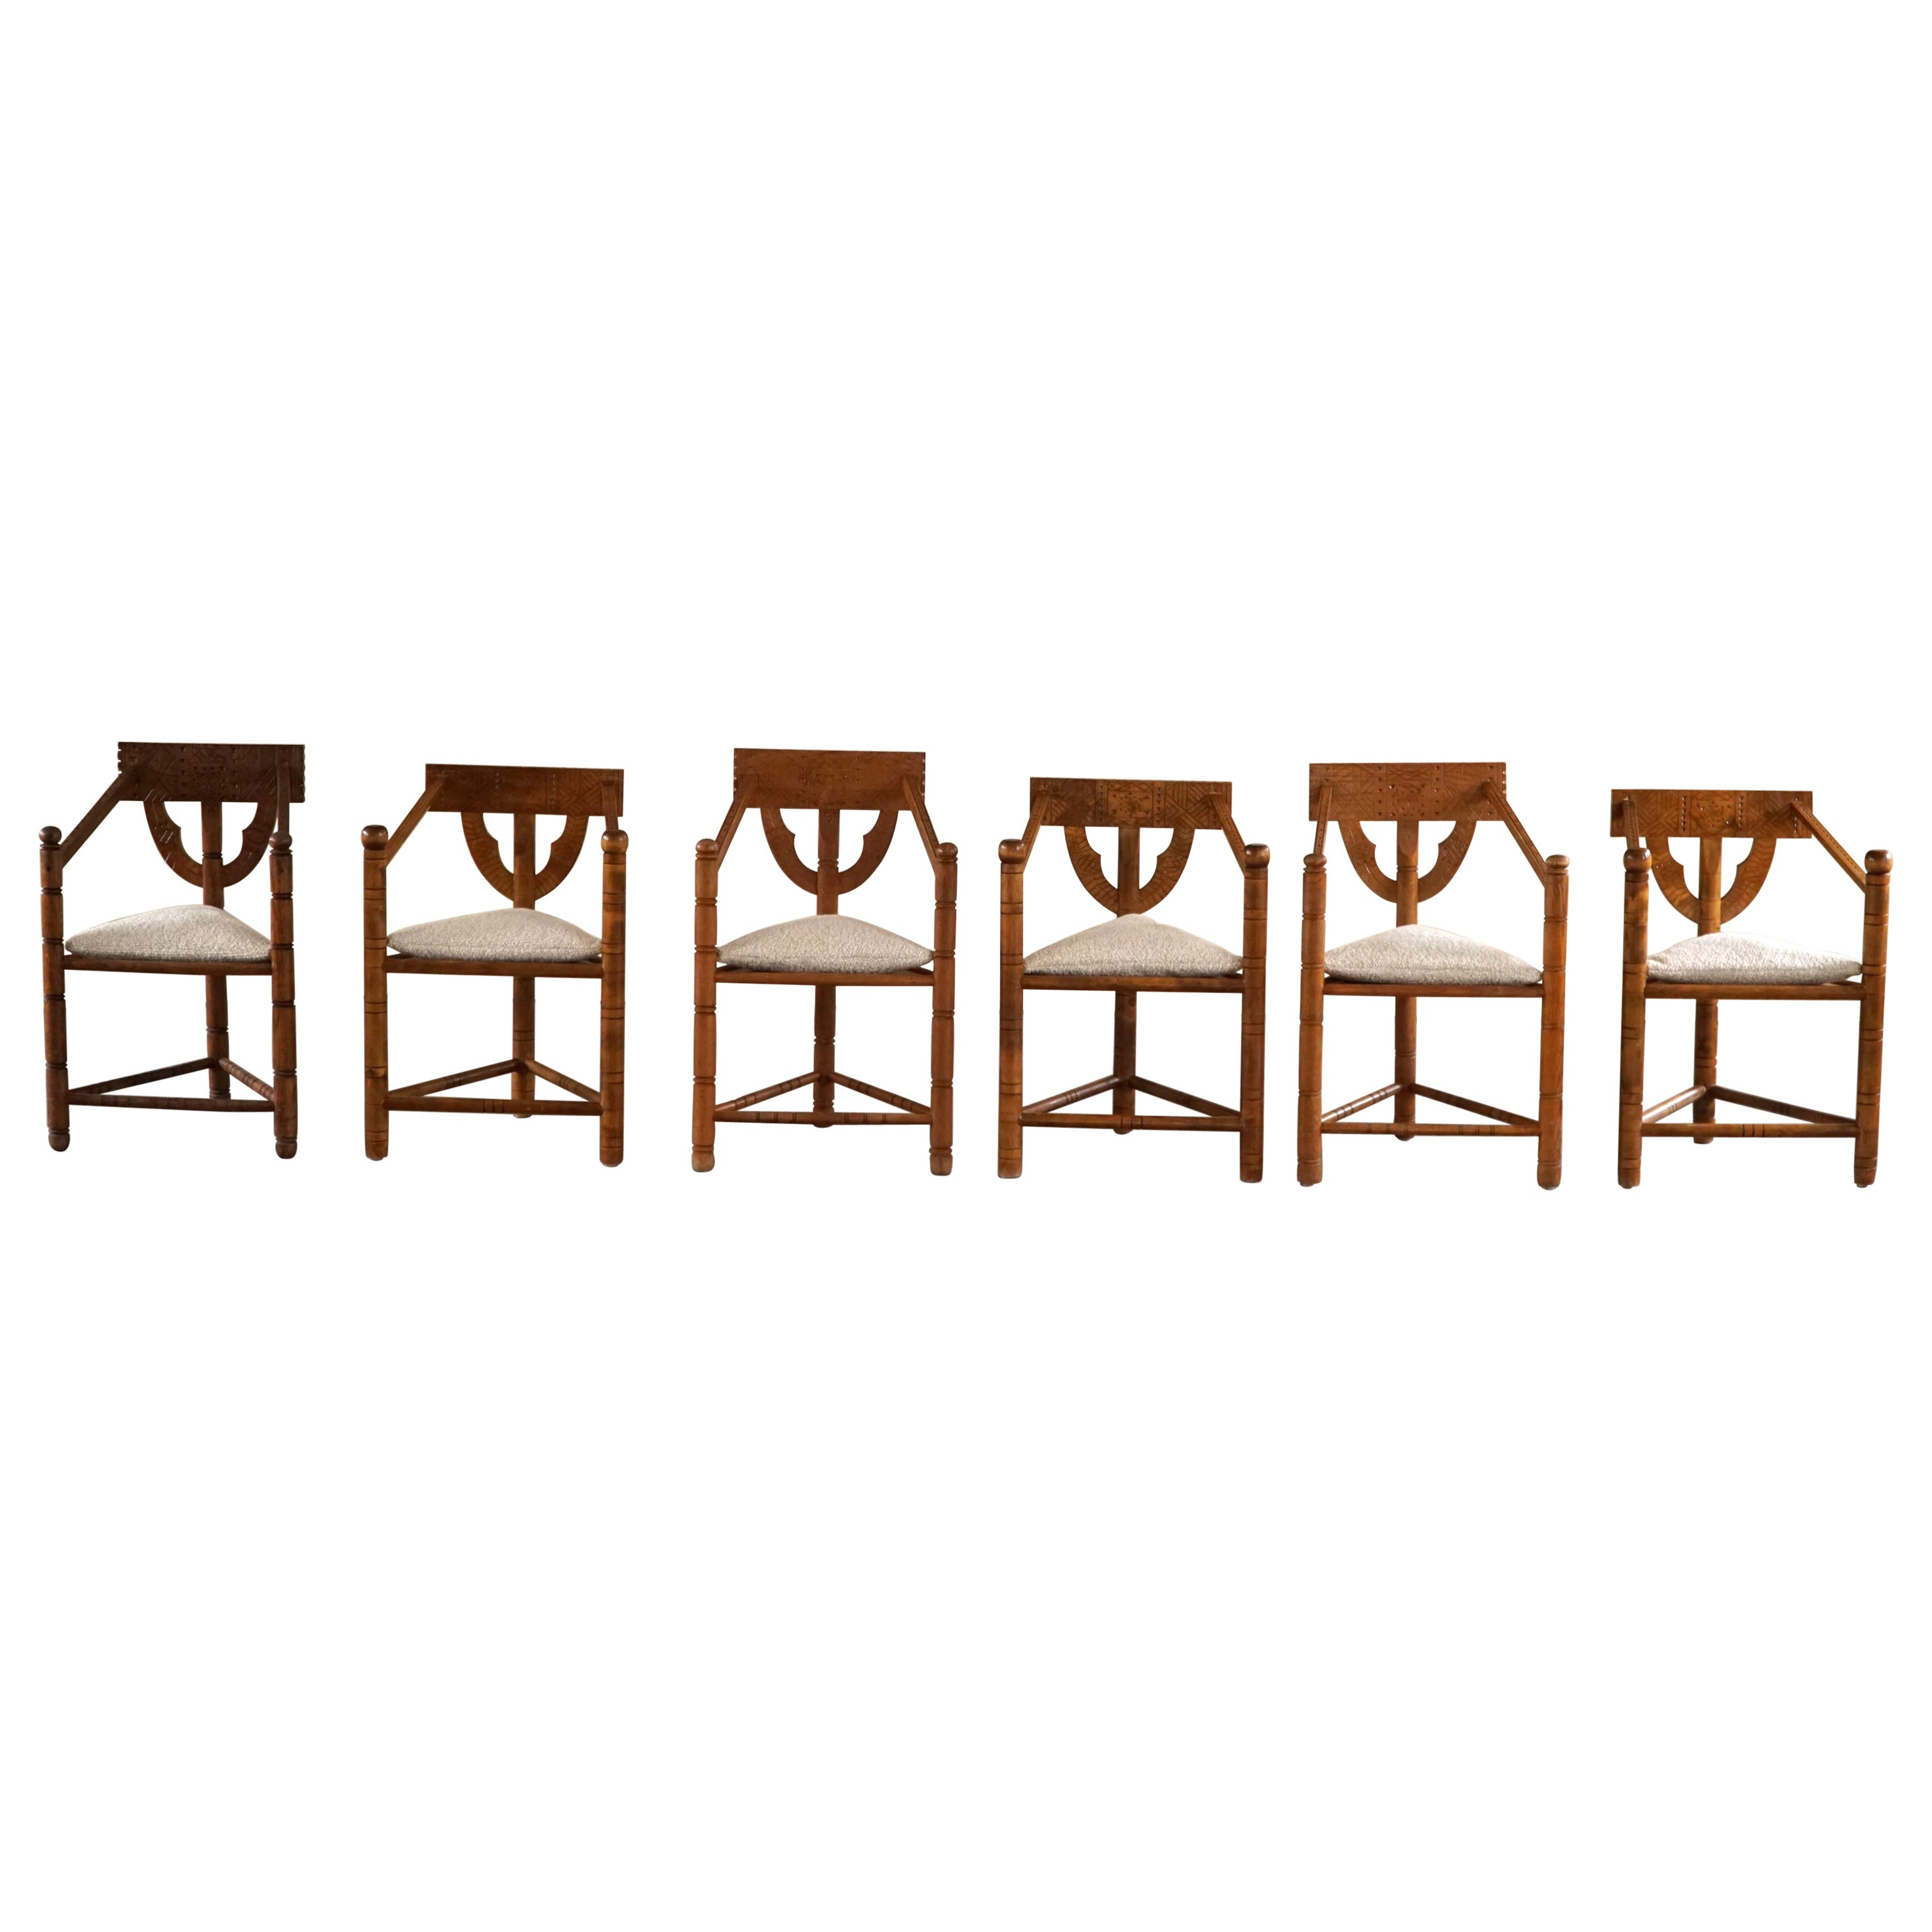 Set of 6 Swedish Monk Chairs with Bouclé Seats, Wabi Sabi, Early 20th Century